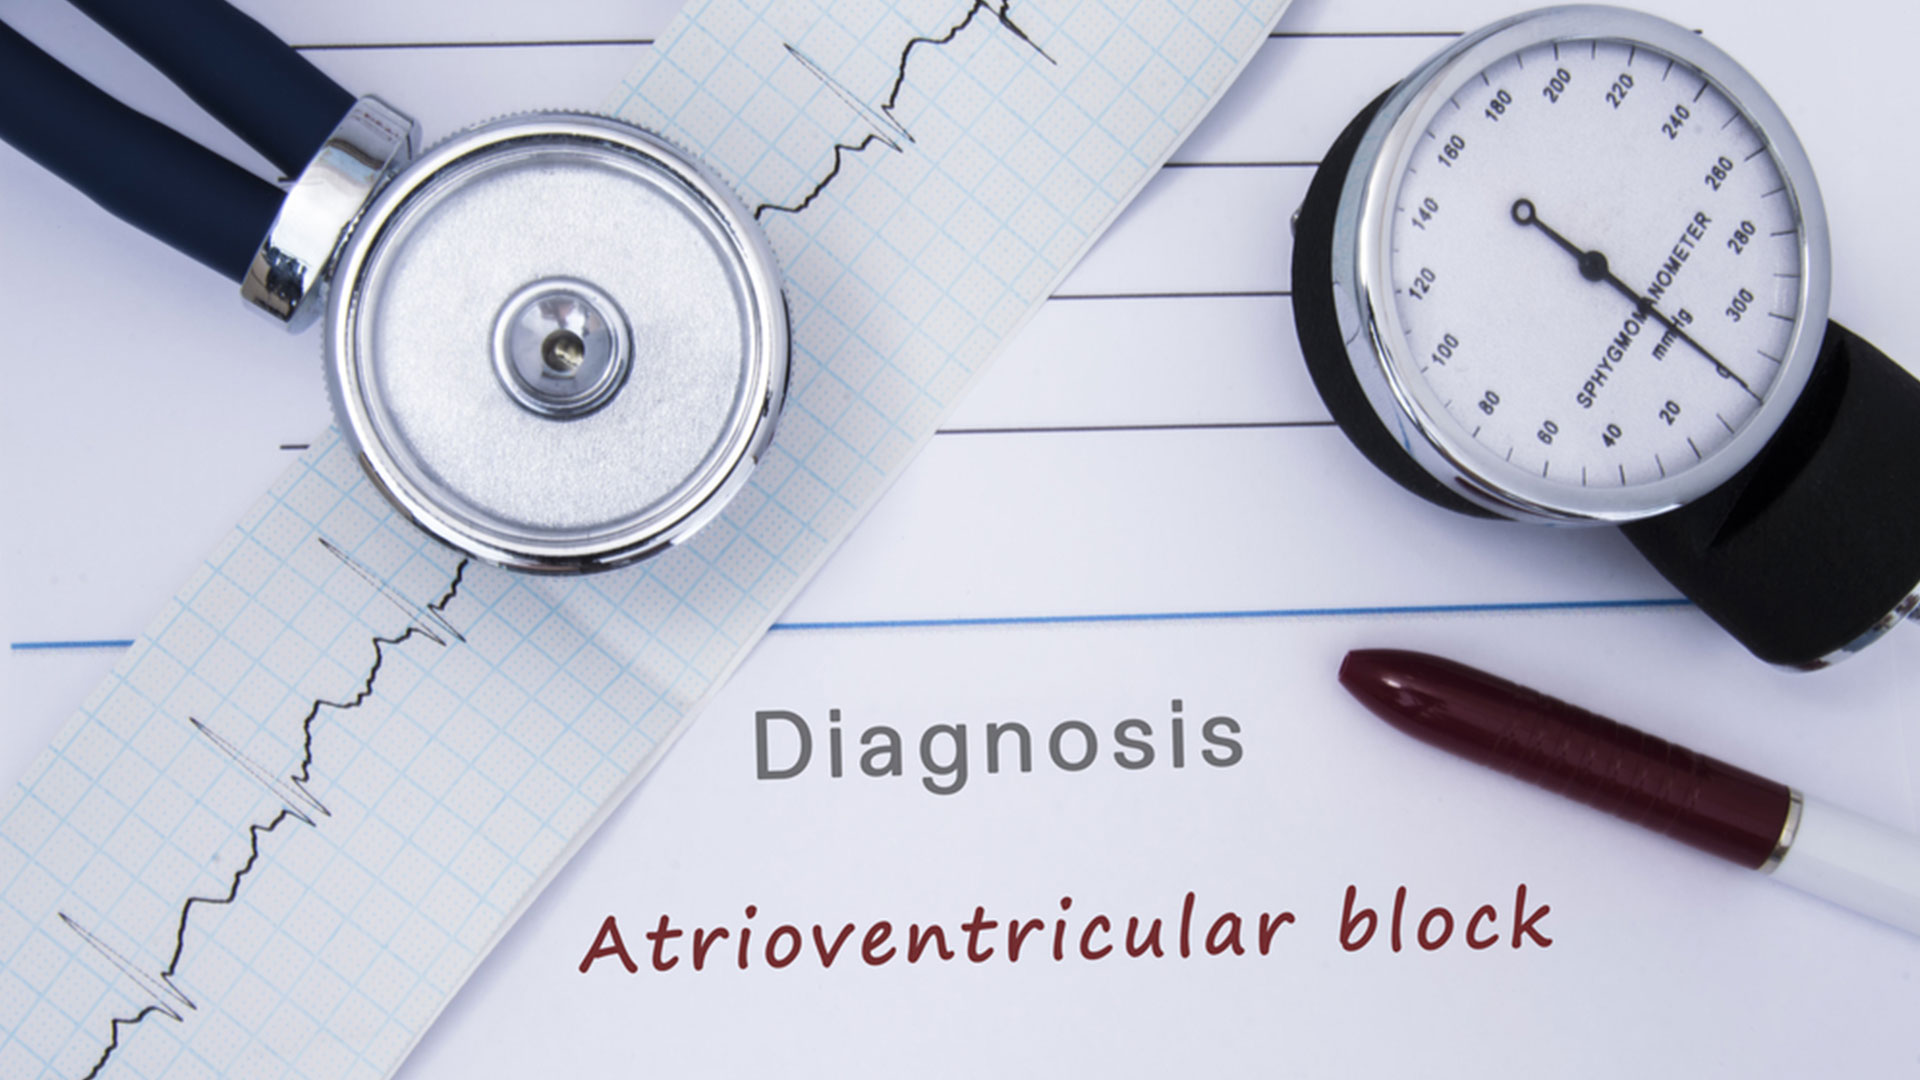 VA Disability Compensation for Atrioventricular Block...